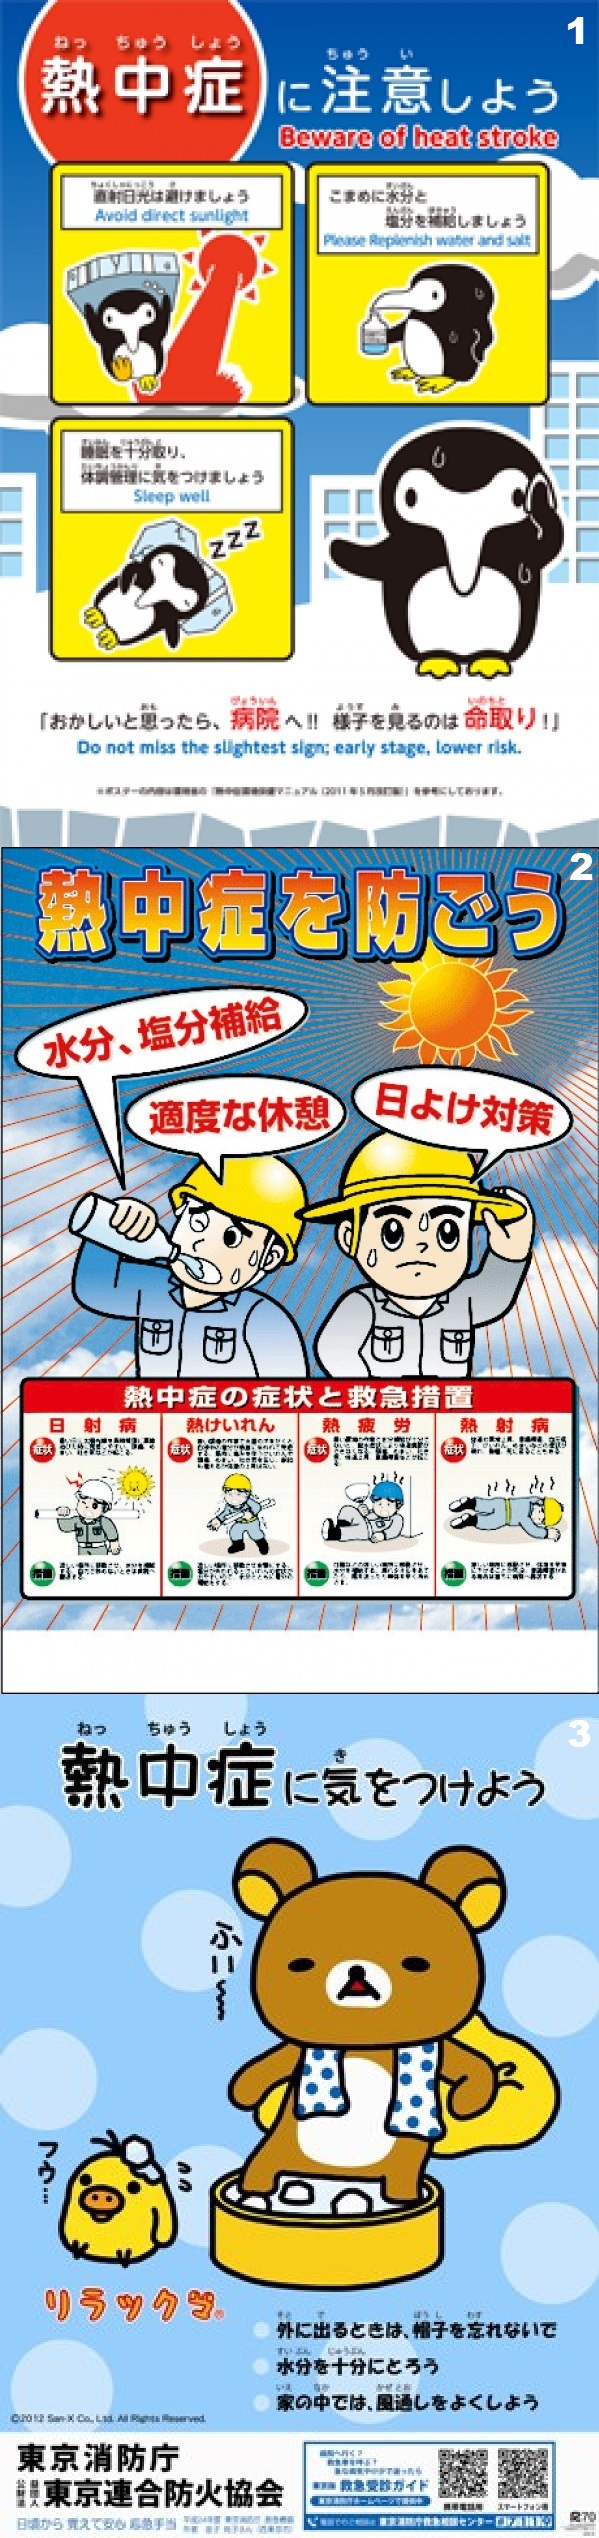 N-heat-stroke-japanese-warnings